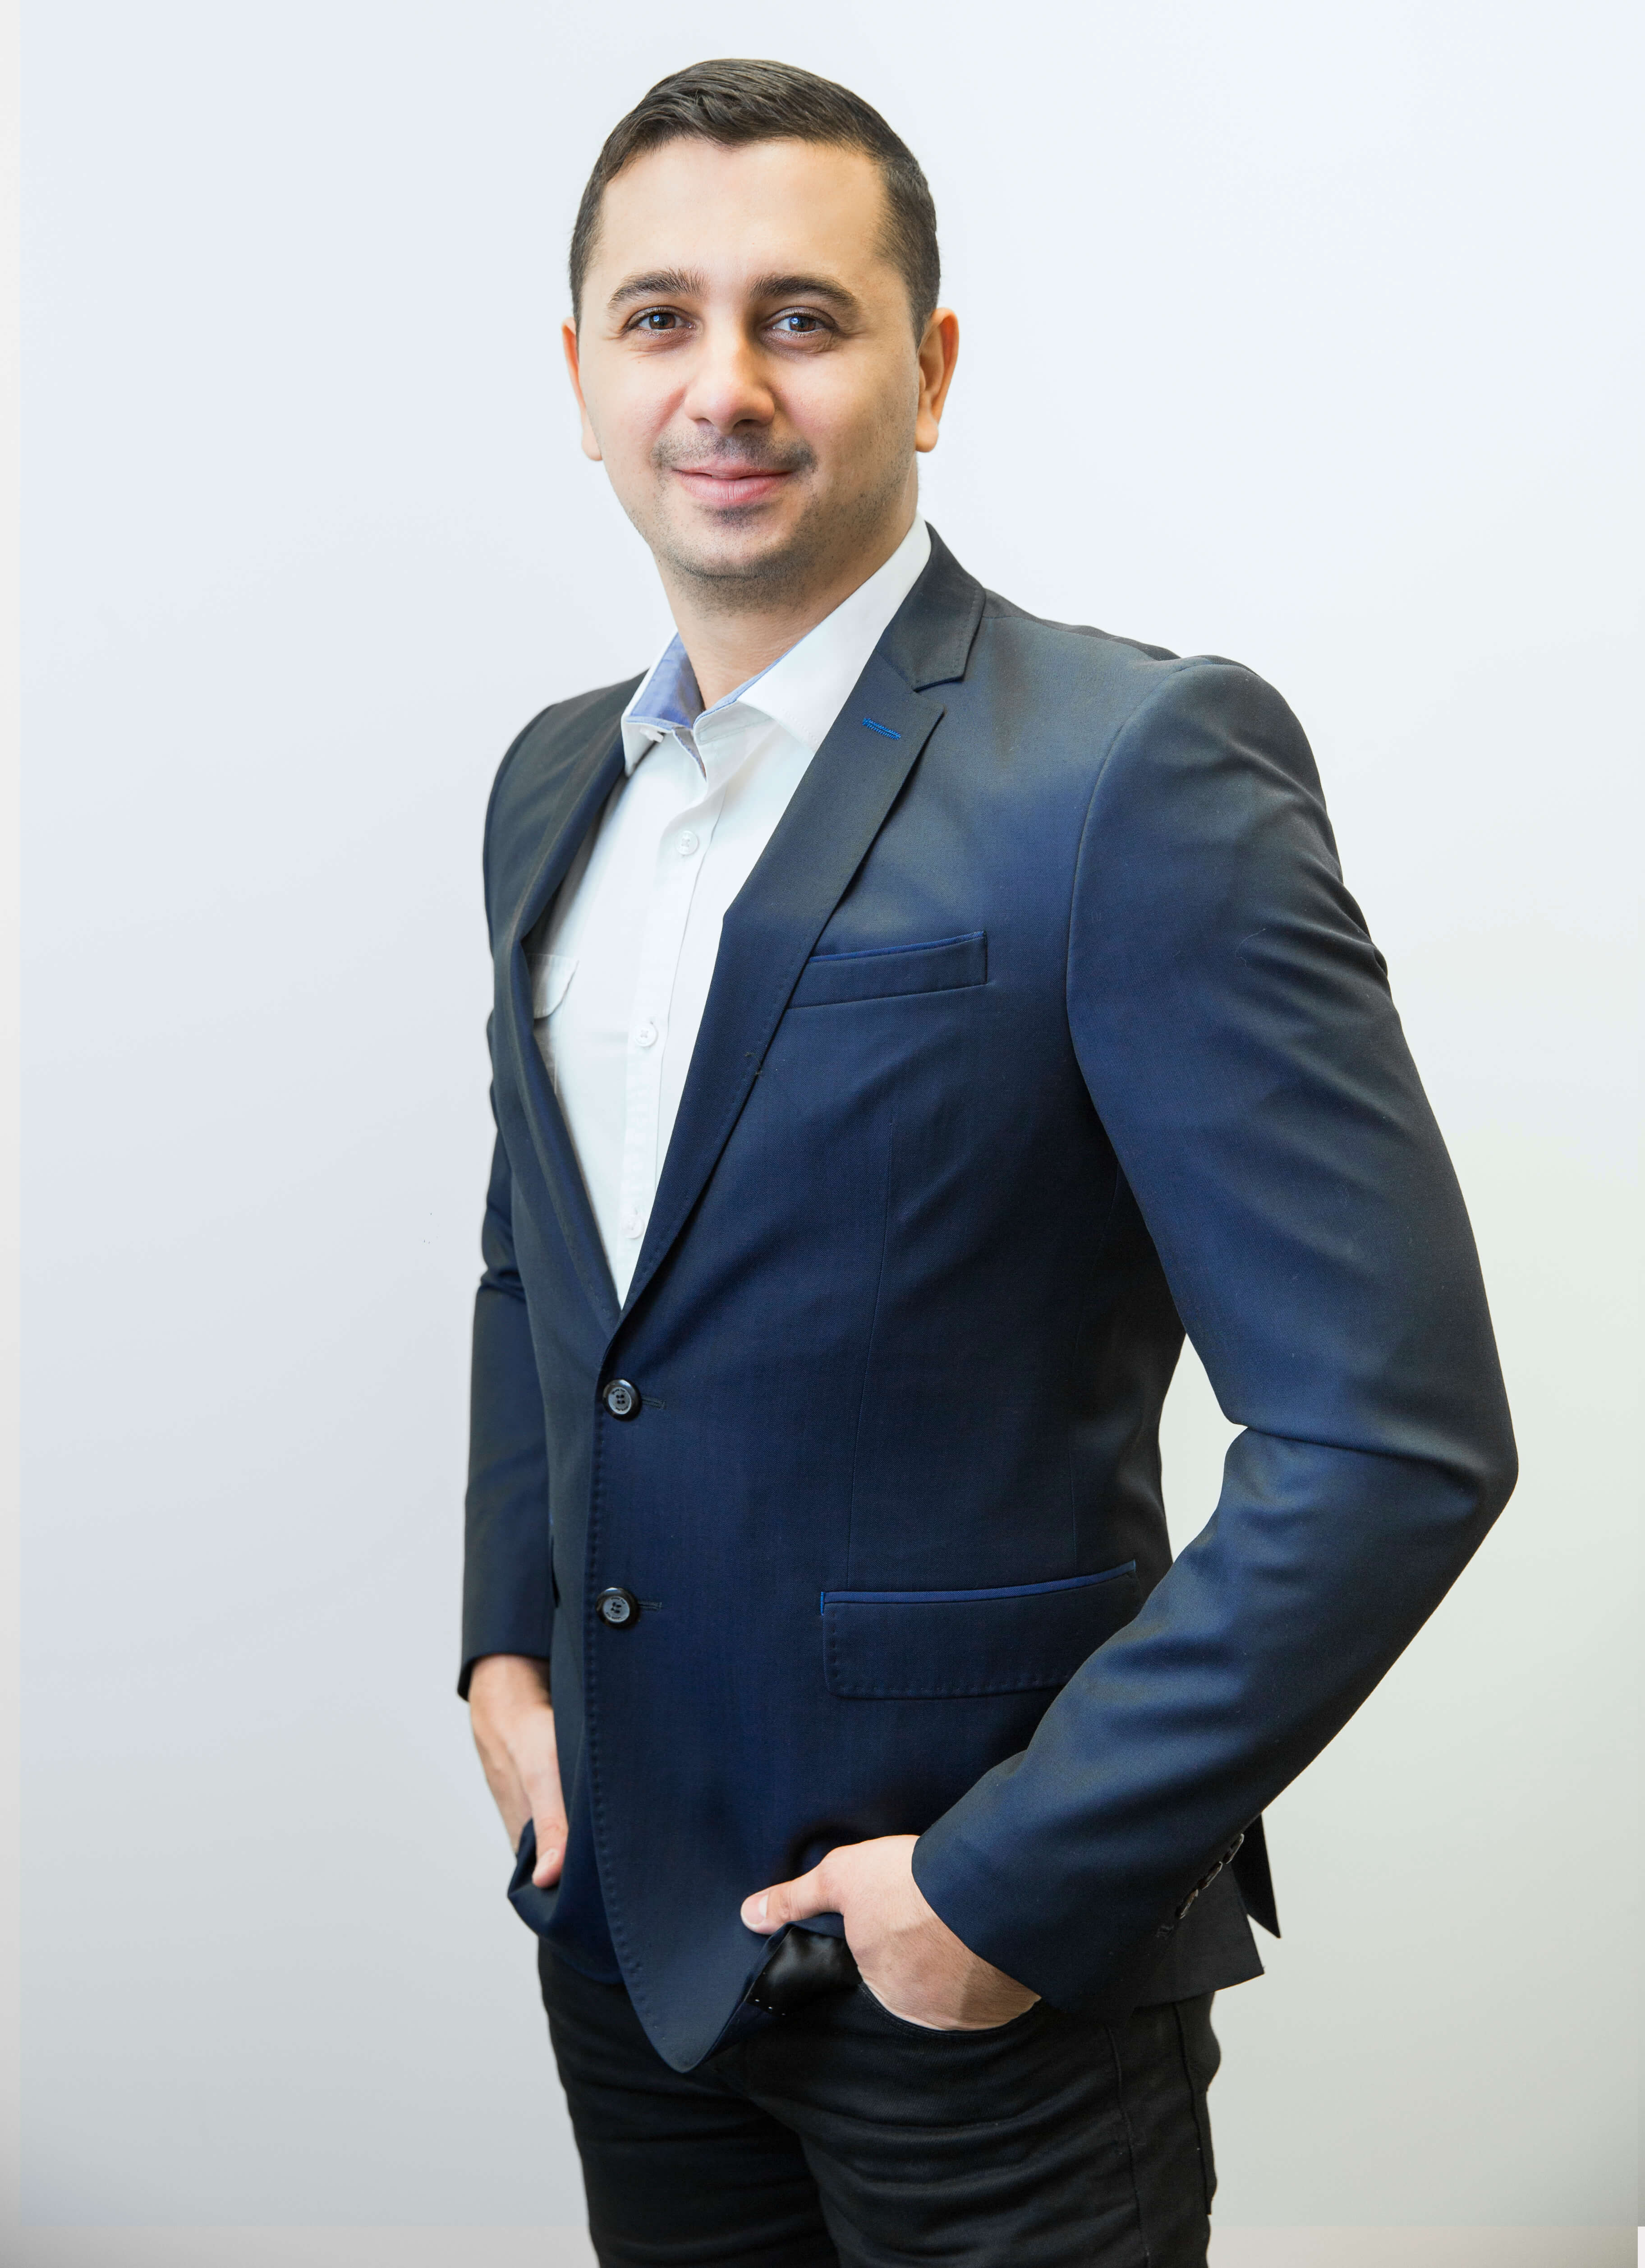 Allstate insurance agent Wissam Deir